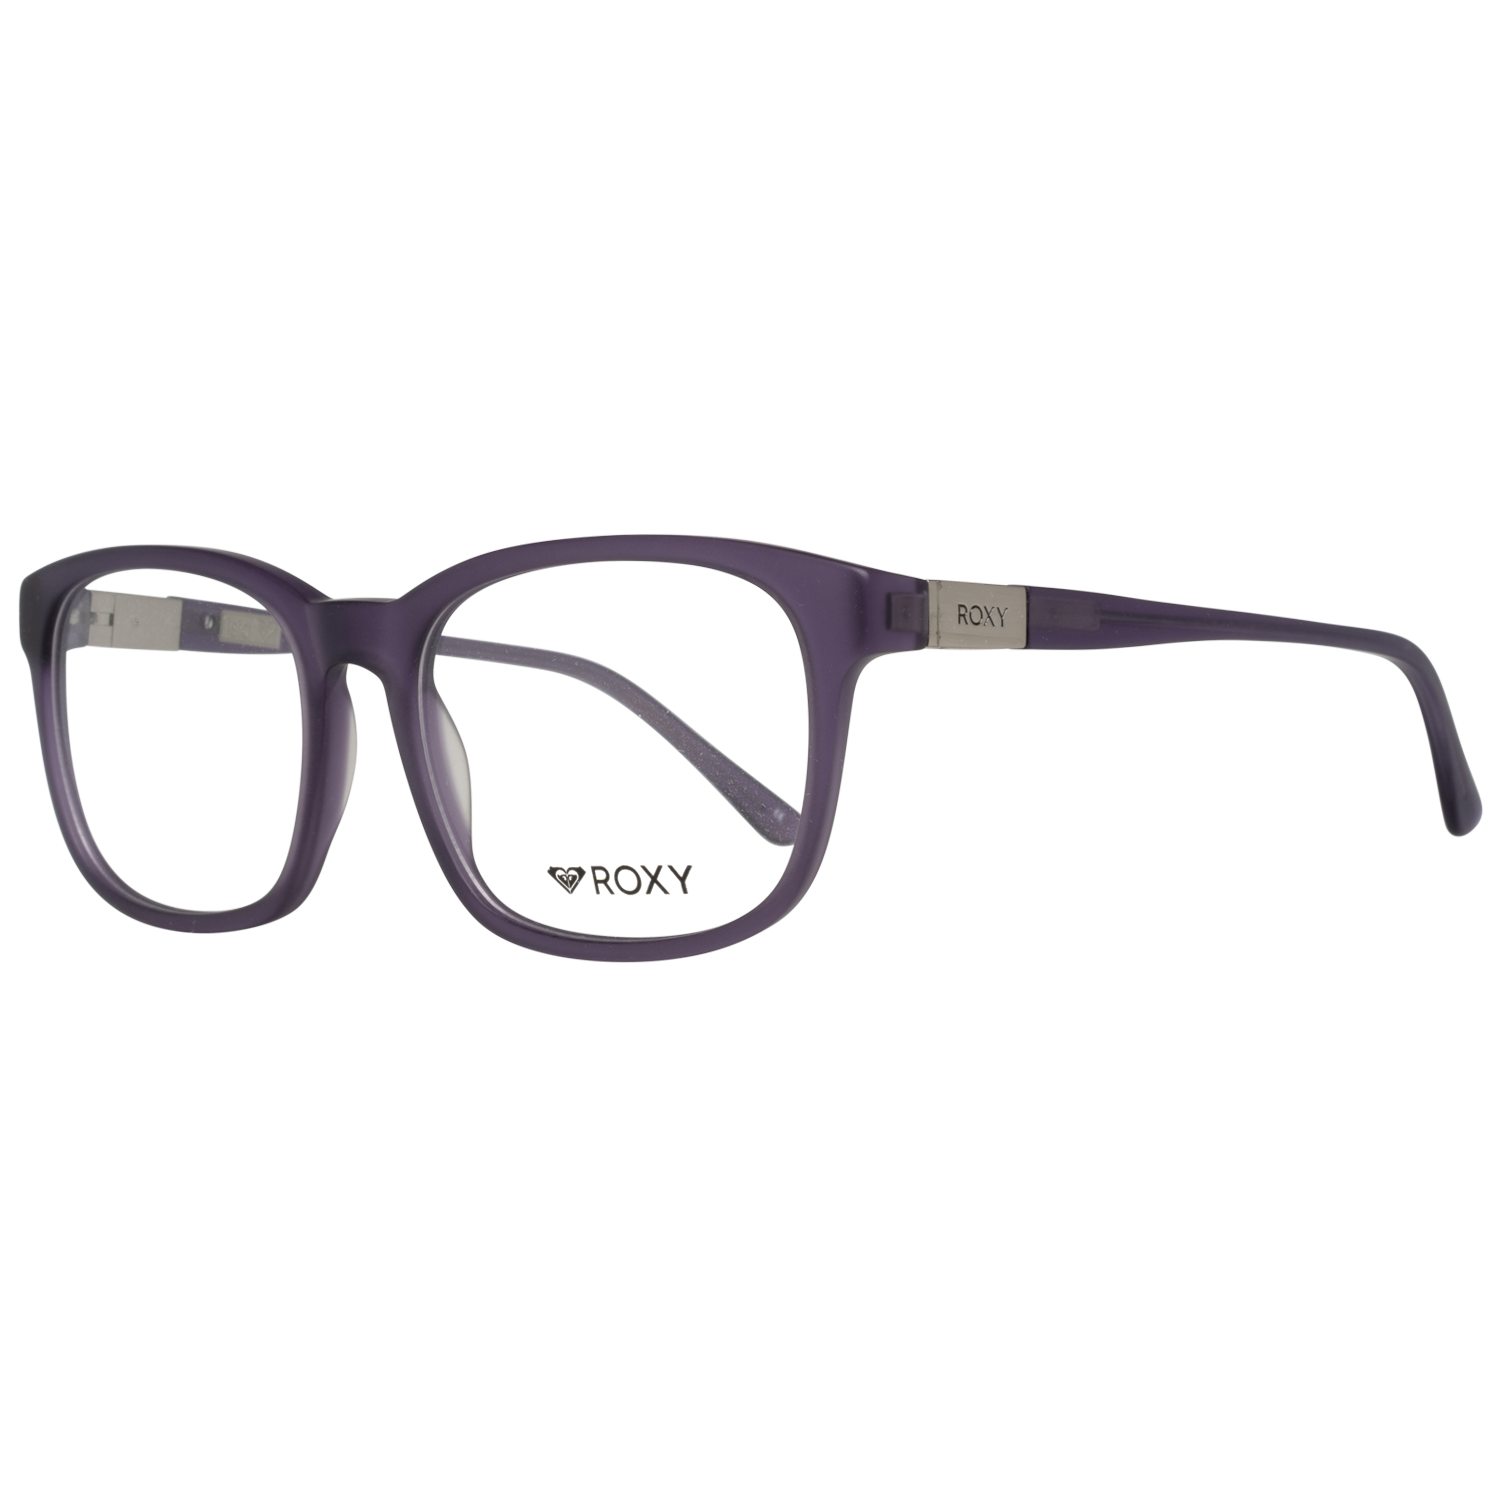 Roxy Frames Roxy Glasses Optical Frame ERJEG03027 APUR 52 Eyeglasses Eyewear UK USA Australia 